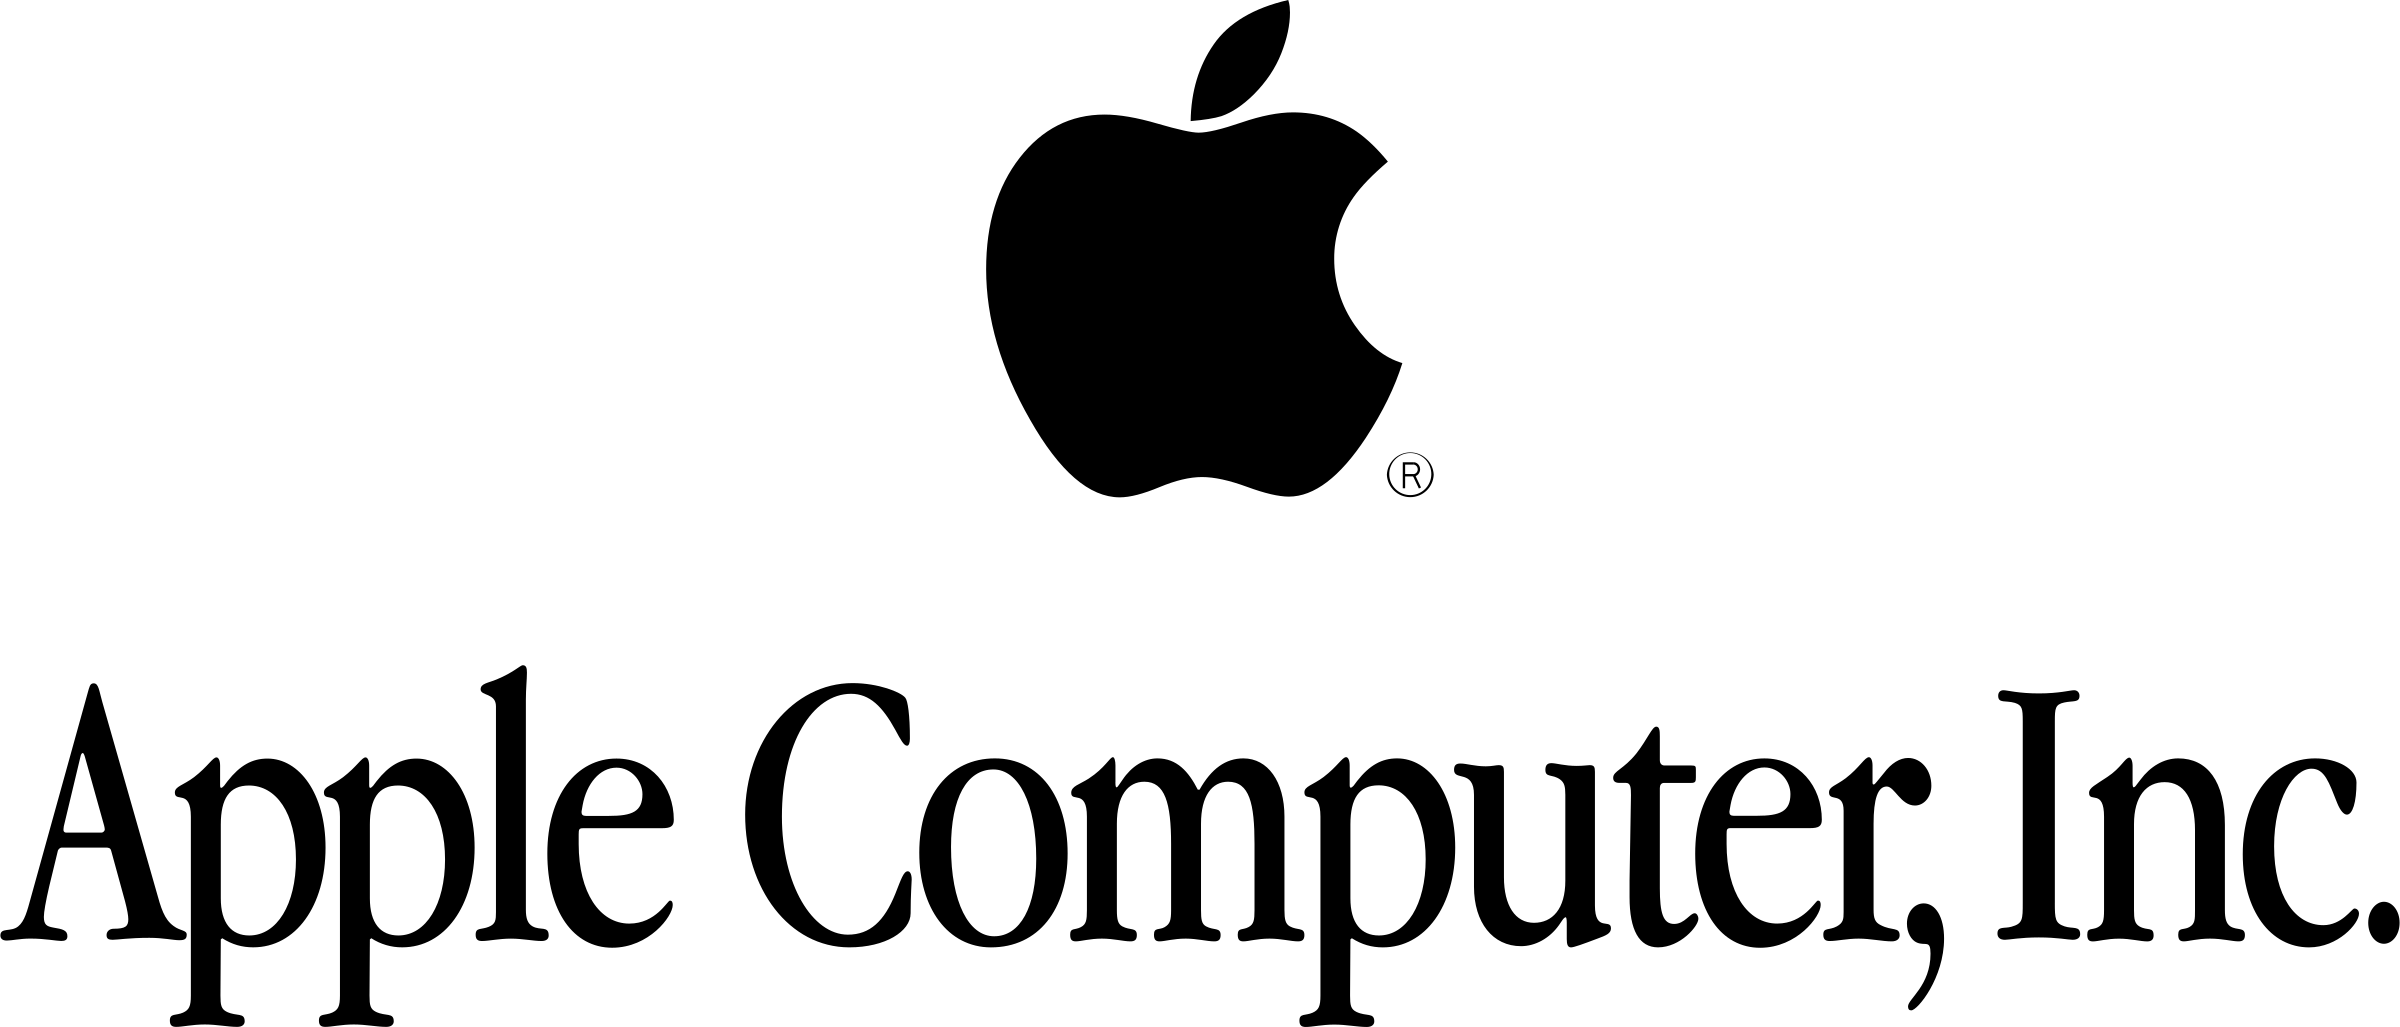 White Apple Computer Logo - APPLE COMPUTER Logo PNG Transparent & SVG Vector - Freebie Supply